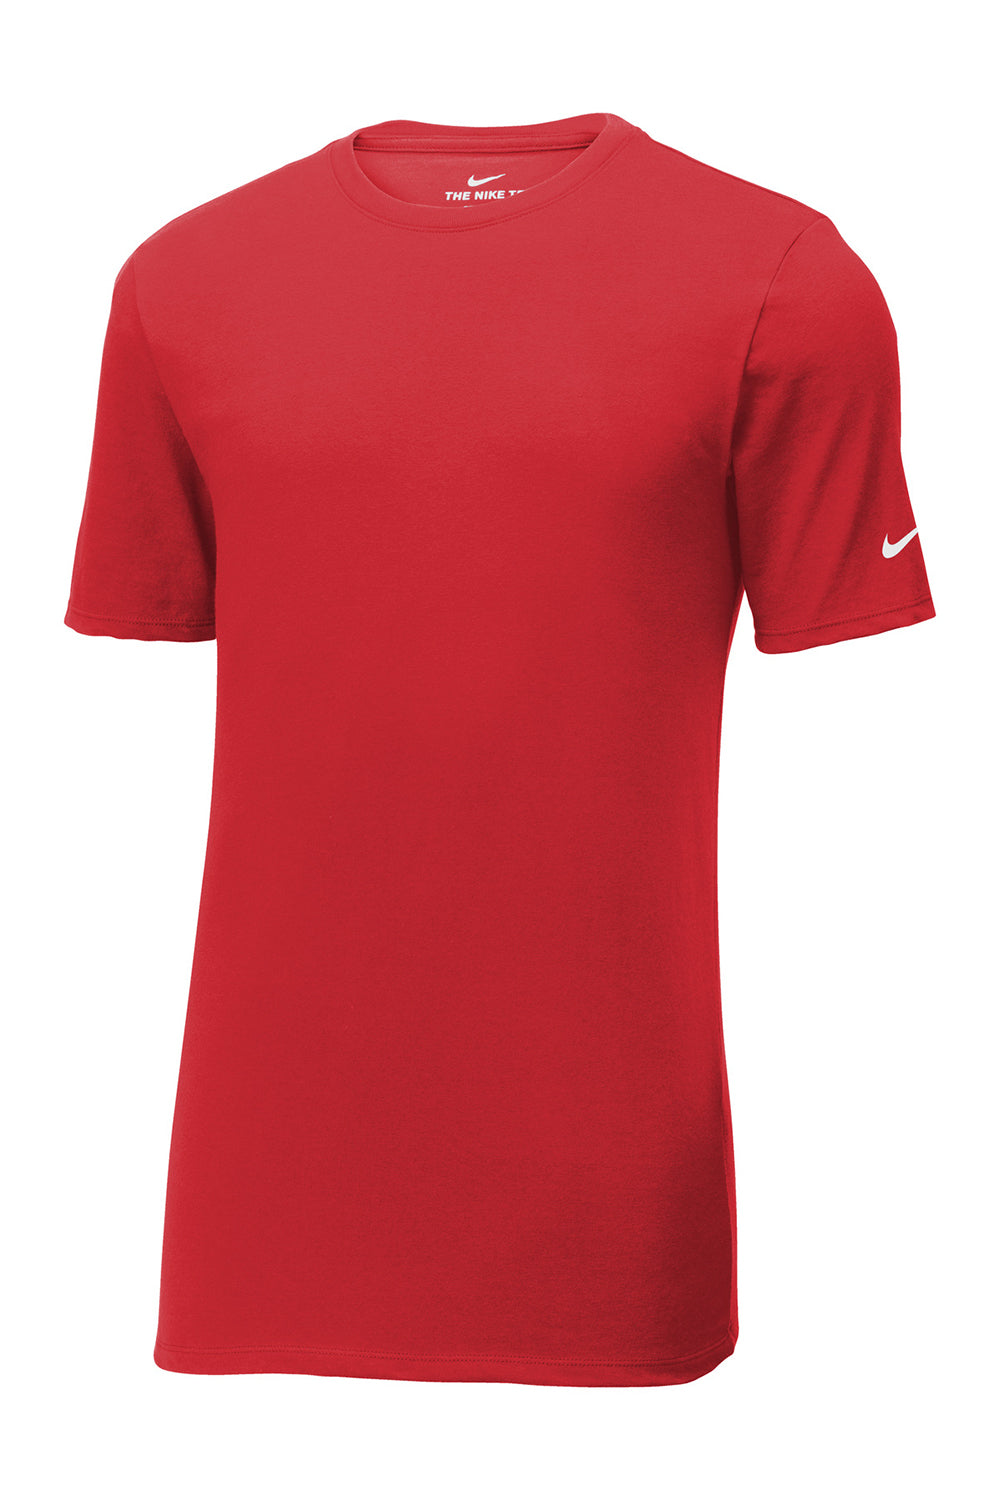 Nike NKBQ5231 Mens Dri-Fit Moisture Wicking Short Sleeve Crewneck T-Shirt Gym Red Flat Front